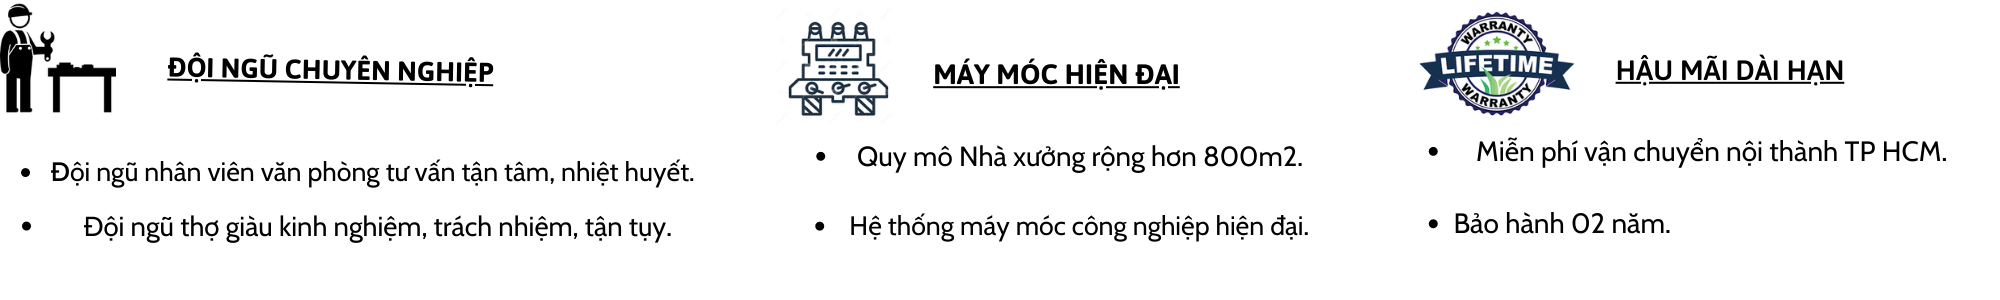 thi-cong-noi-that-nha-pho-04.png (121 KB)